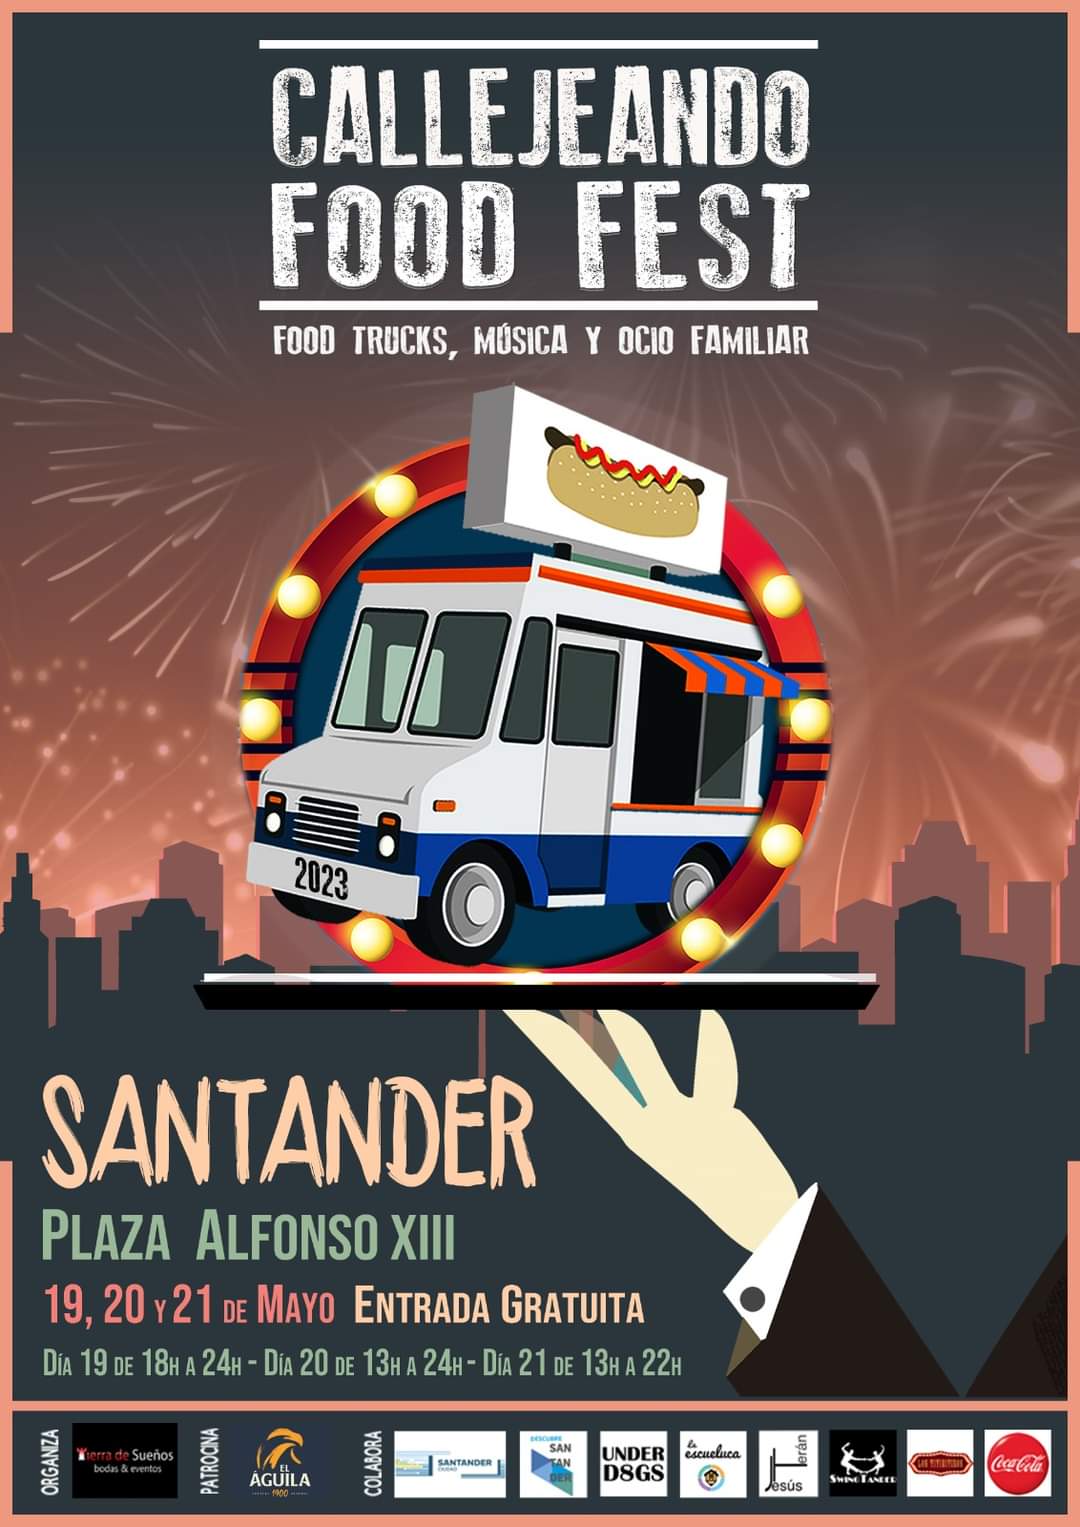 Callejeando Food Fest en Santander 2023